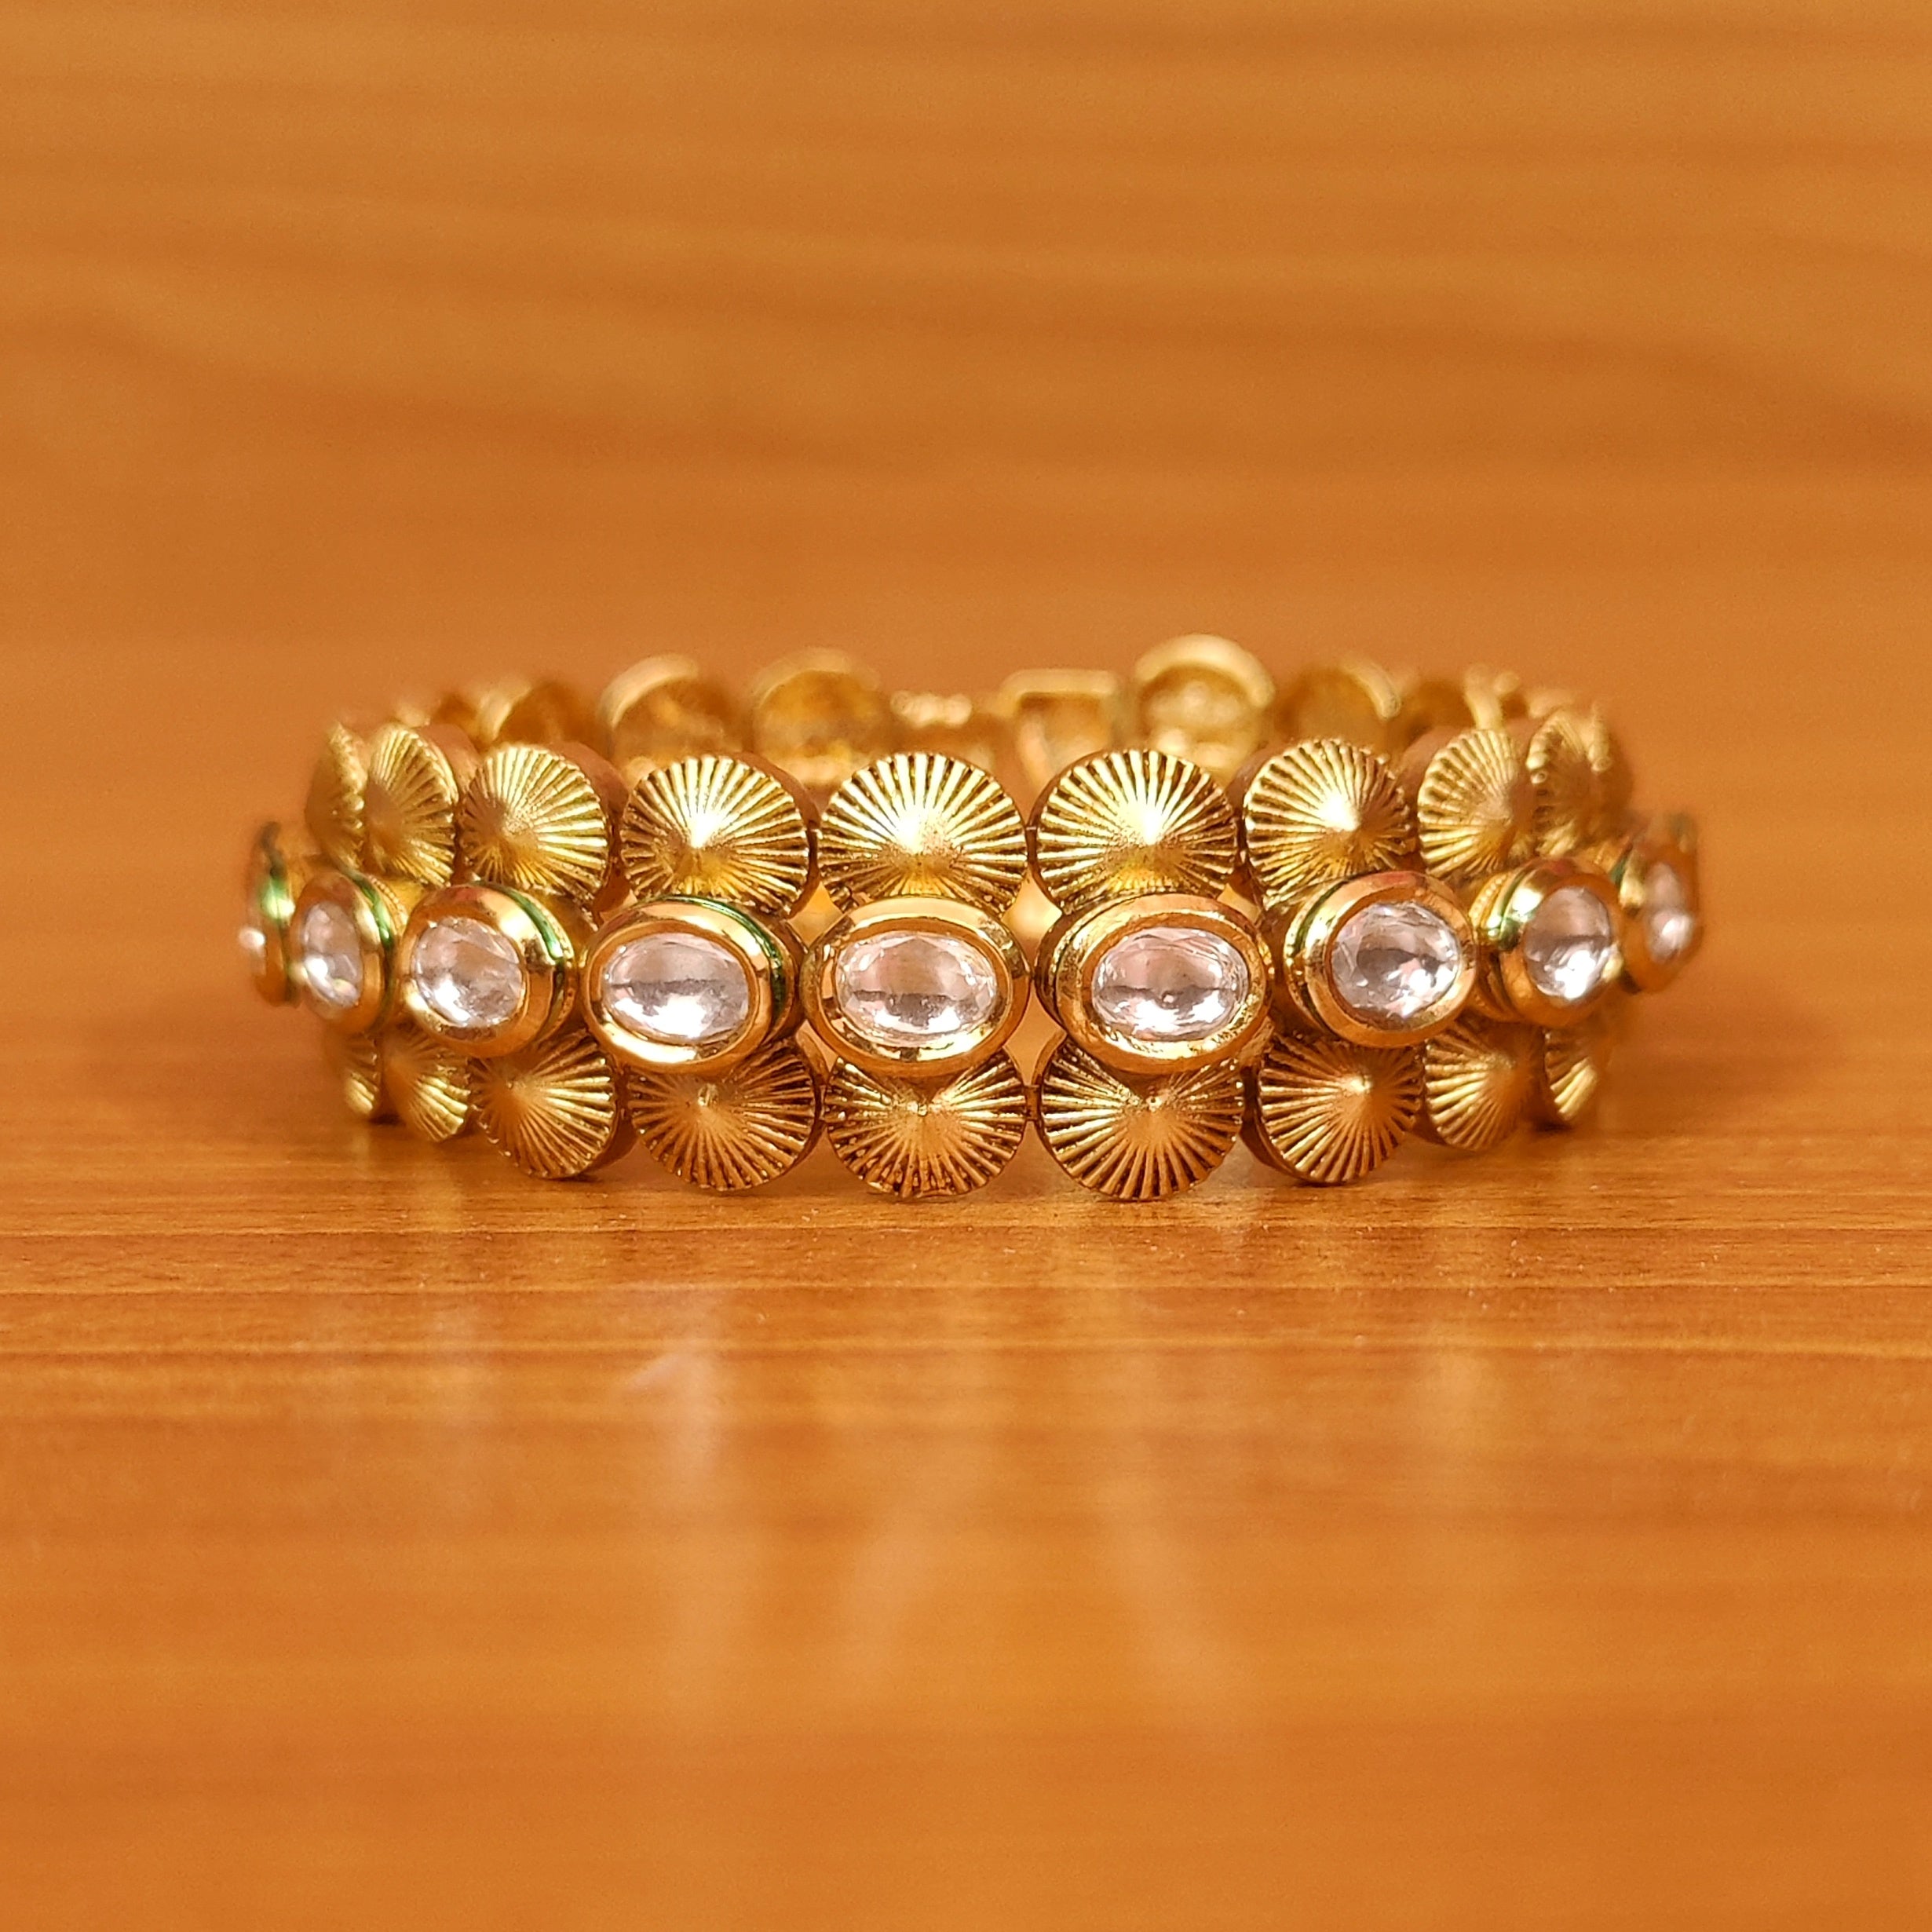 Cuff bracelet Antique Lace in 24k gold - 13th Anniversary Gift - Monika  Knutsson